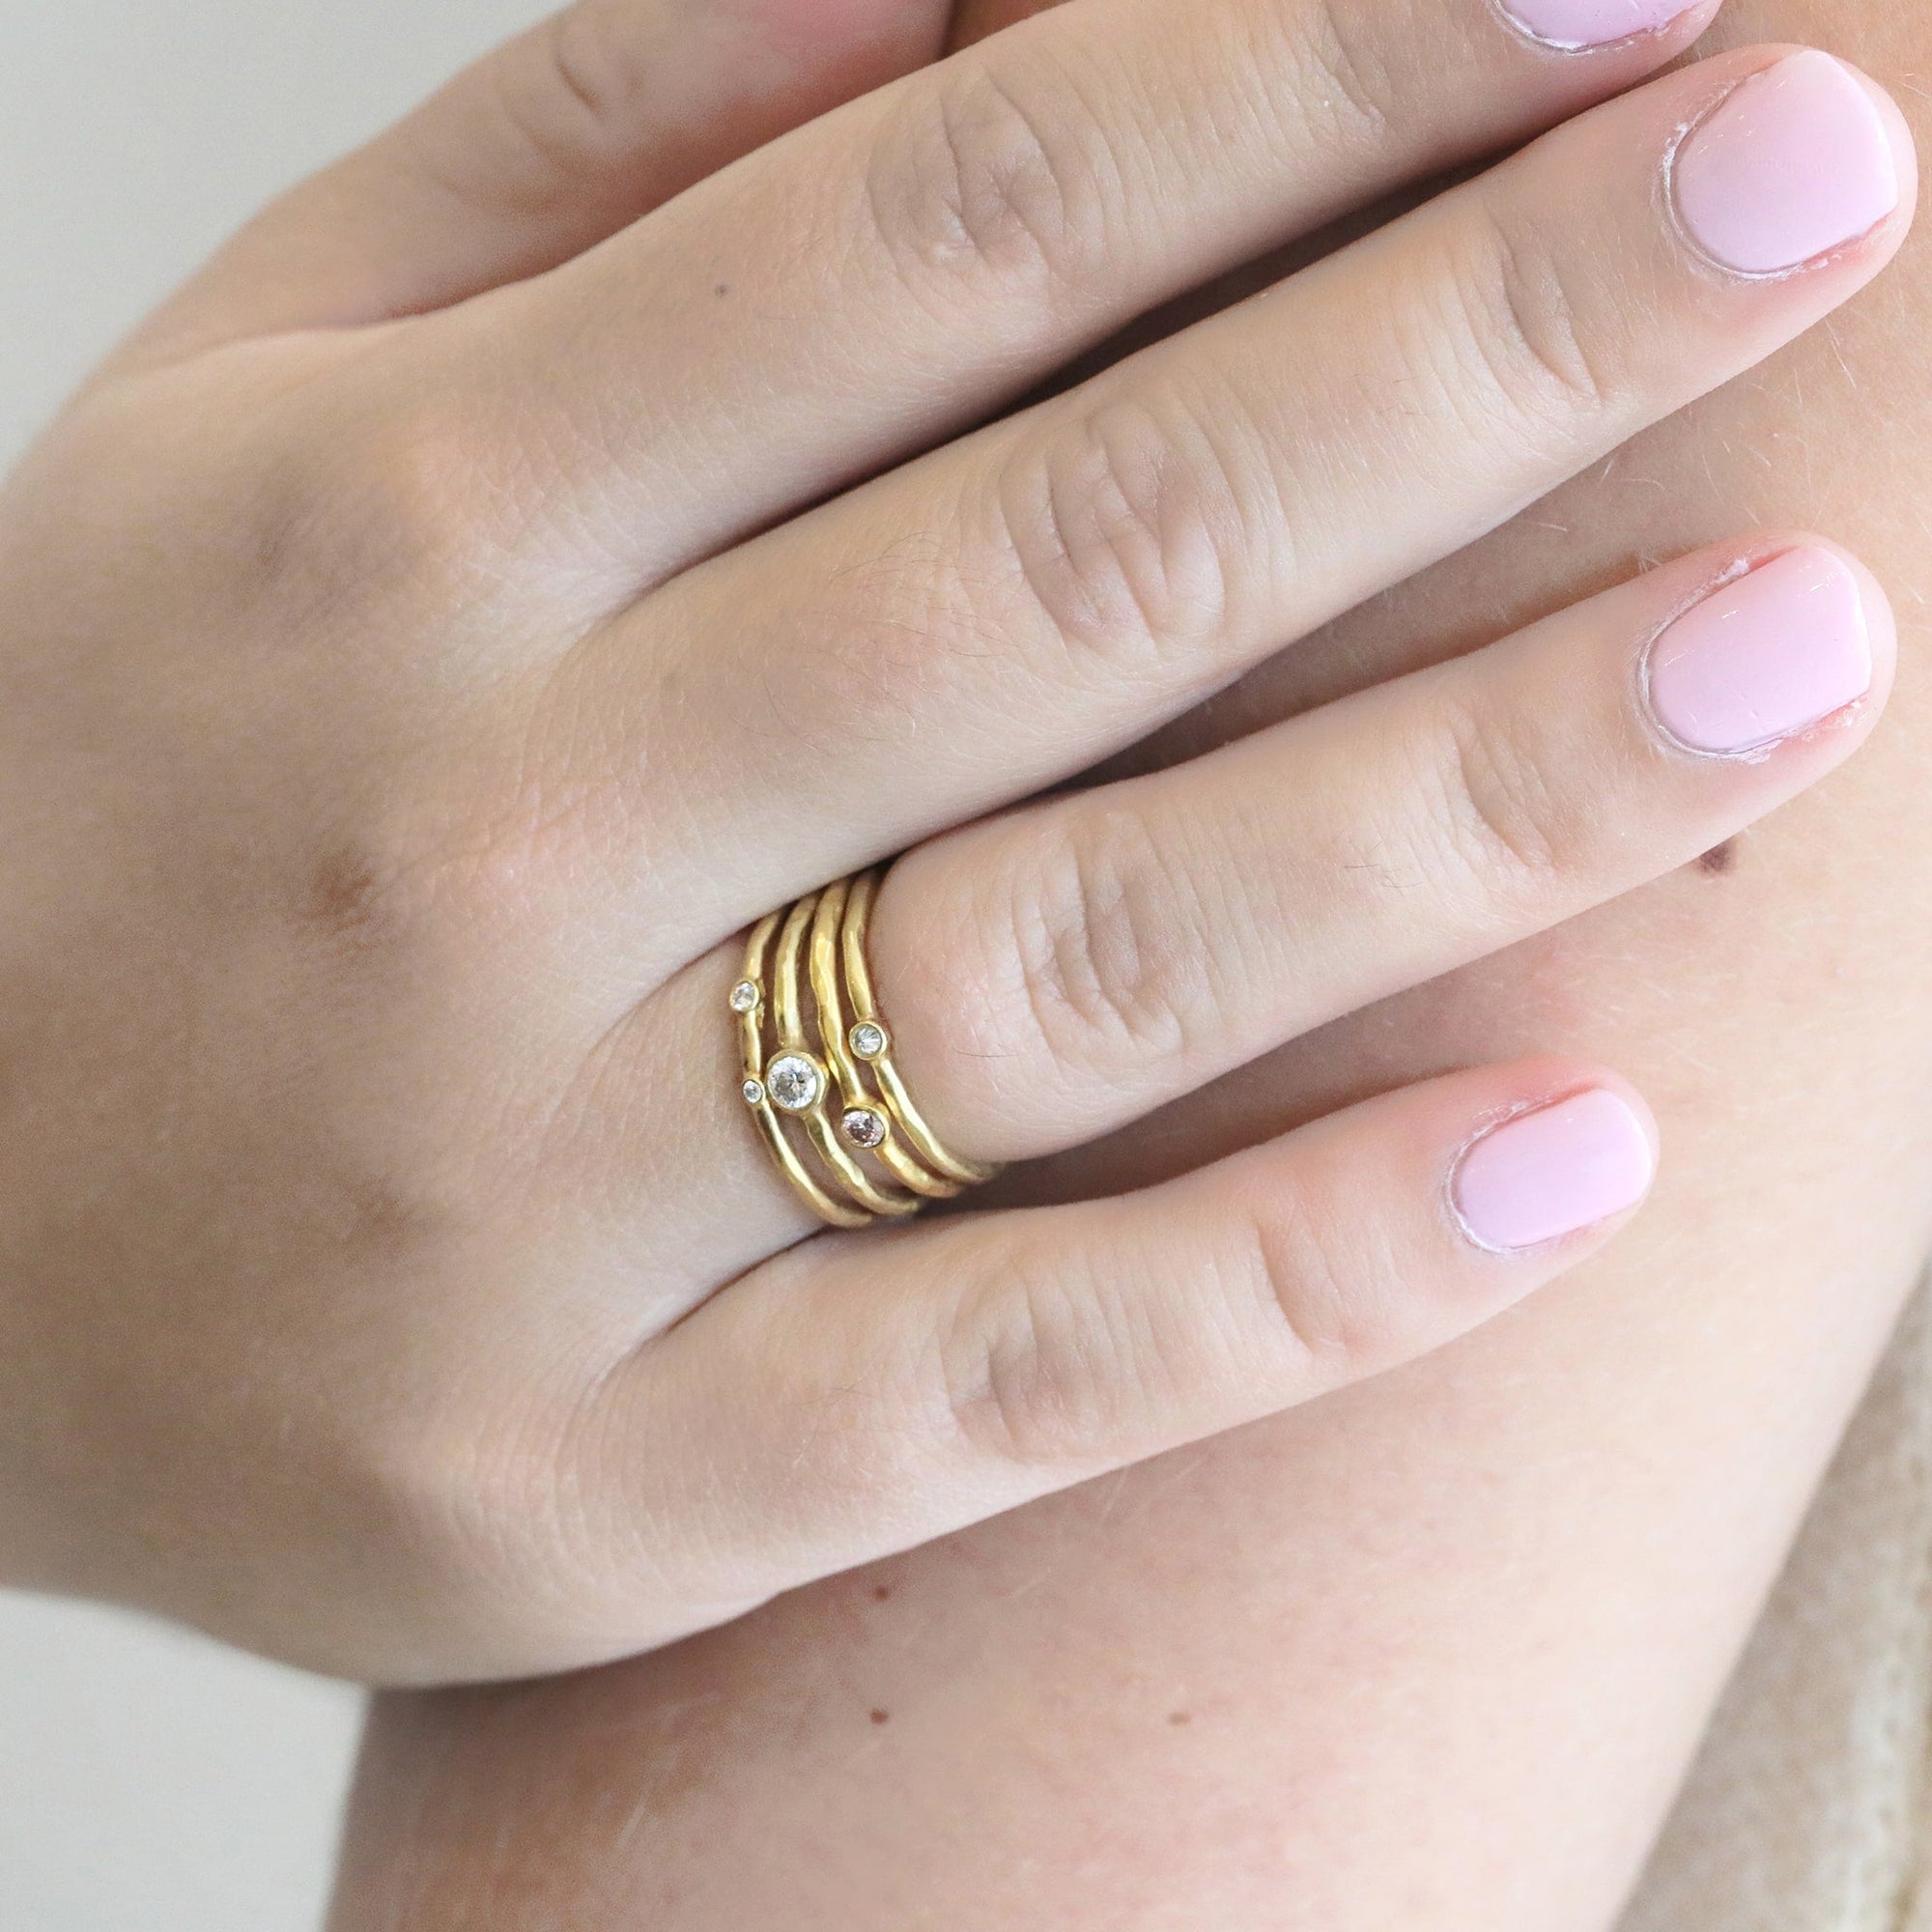 Gold Bezel-Set Fancy Light Pink Diamond Ring